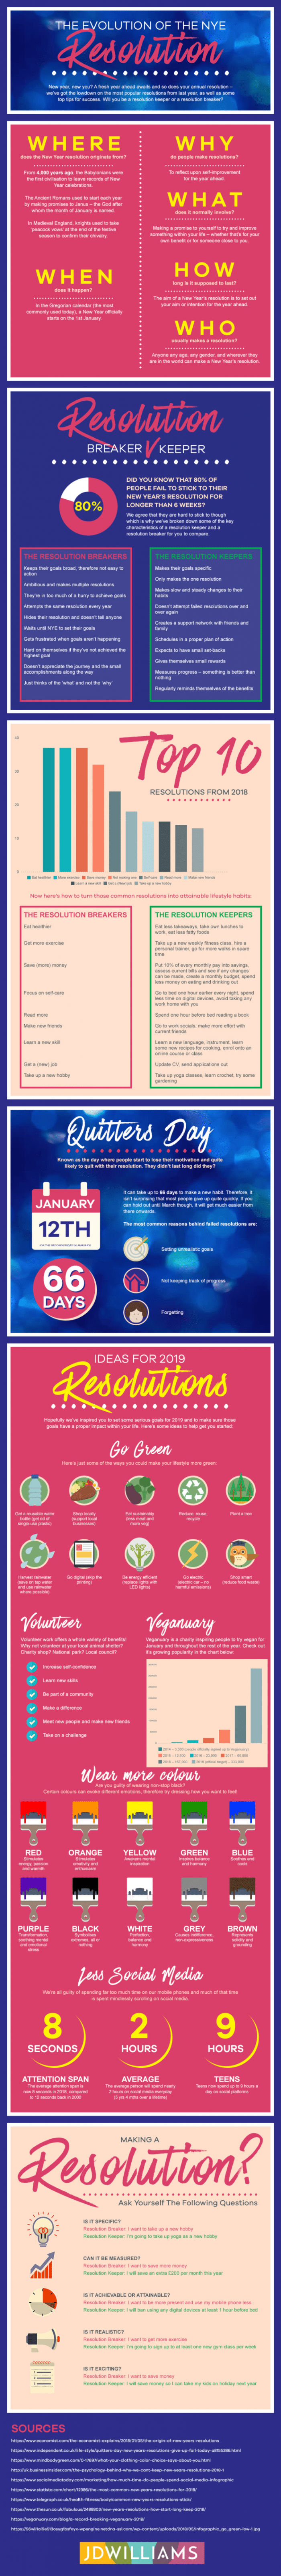 Evolution of NYE Resolutions